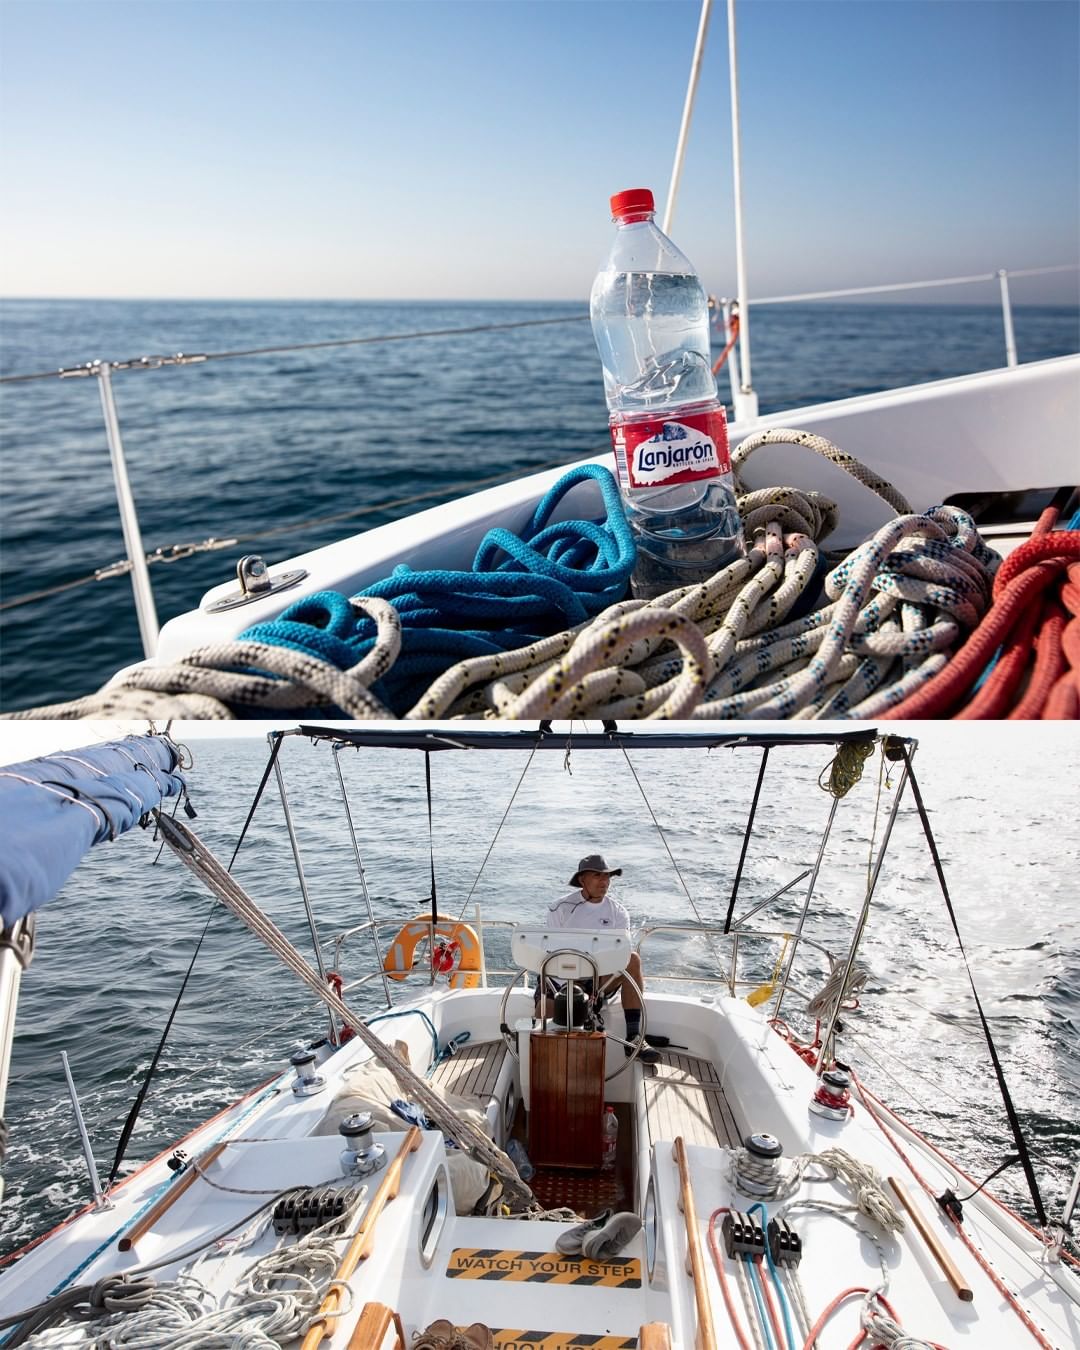 Lanjaron, at sea in Dubai Muscat Race 2020